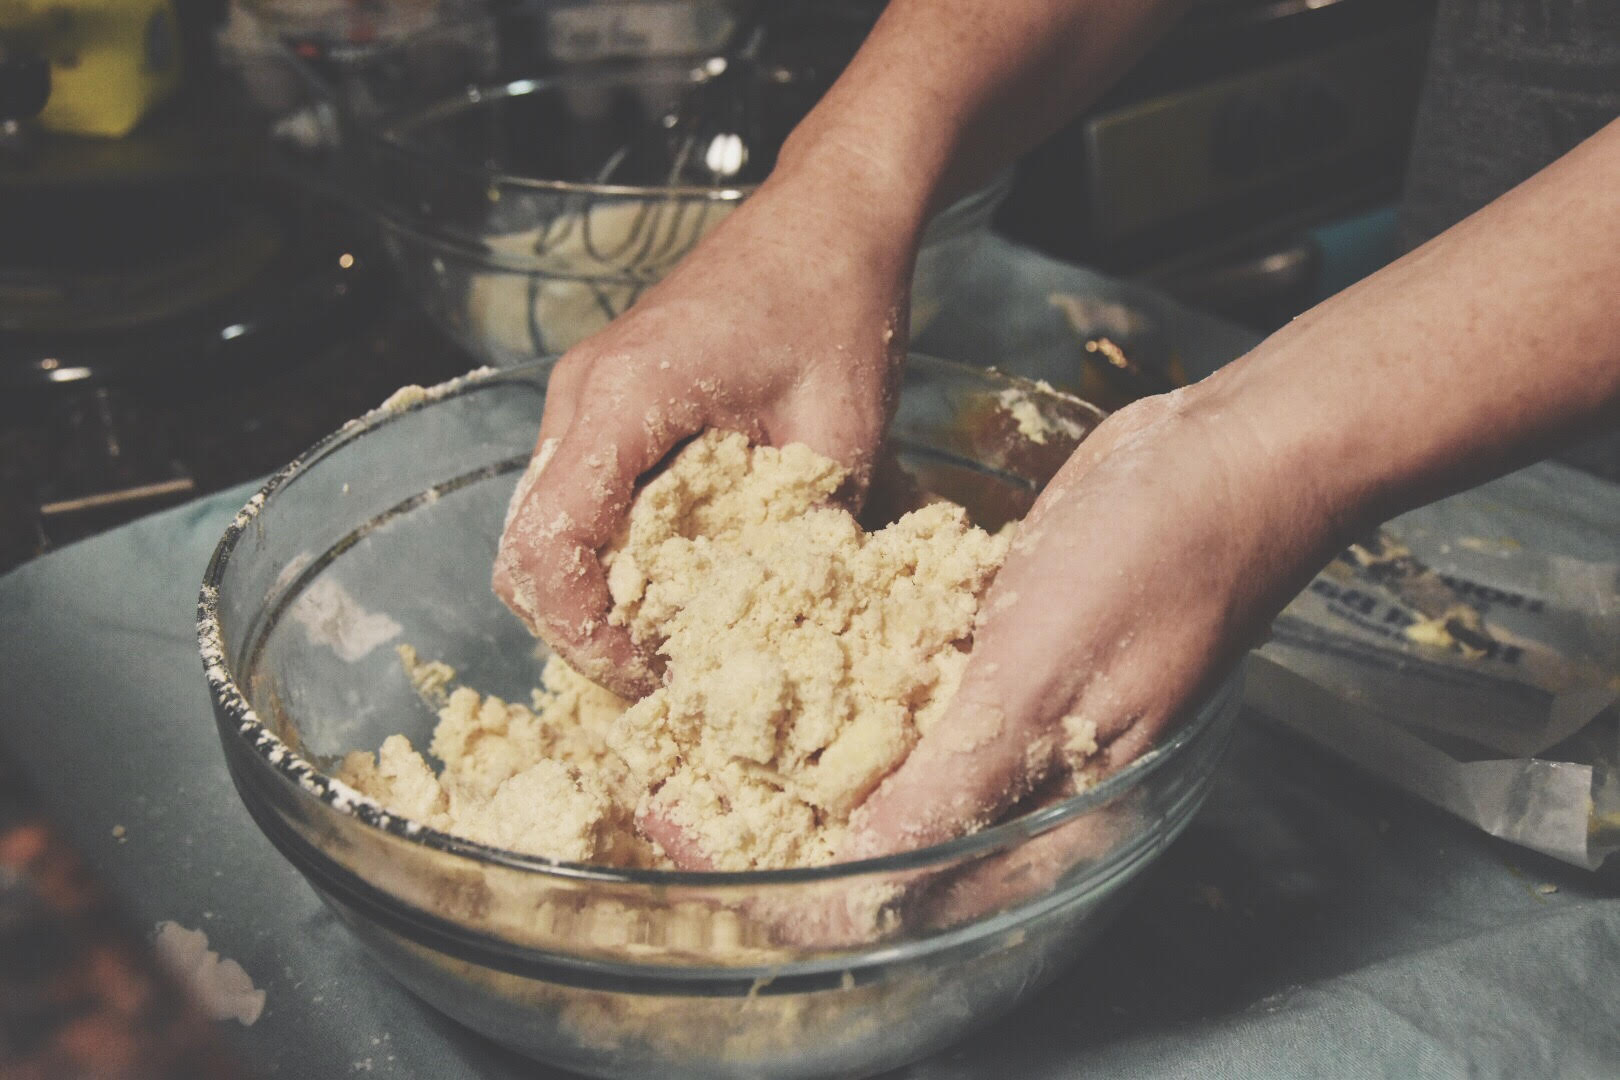 Mixing the Scone Dough